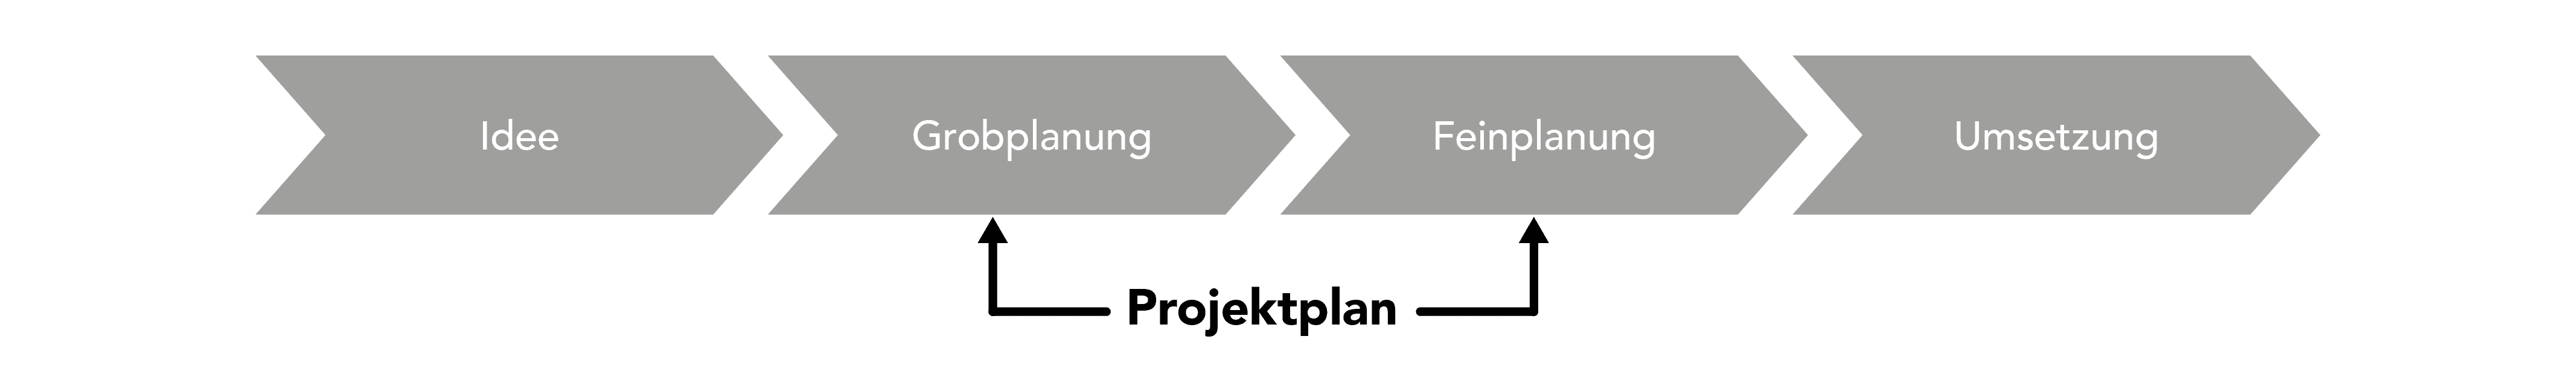 Projektstrukturplan PSP